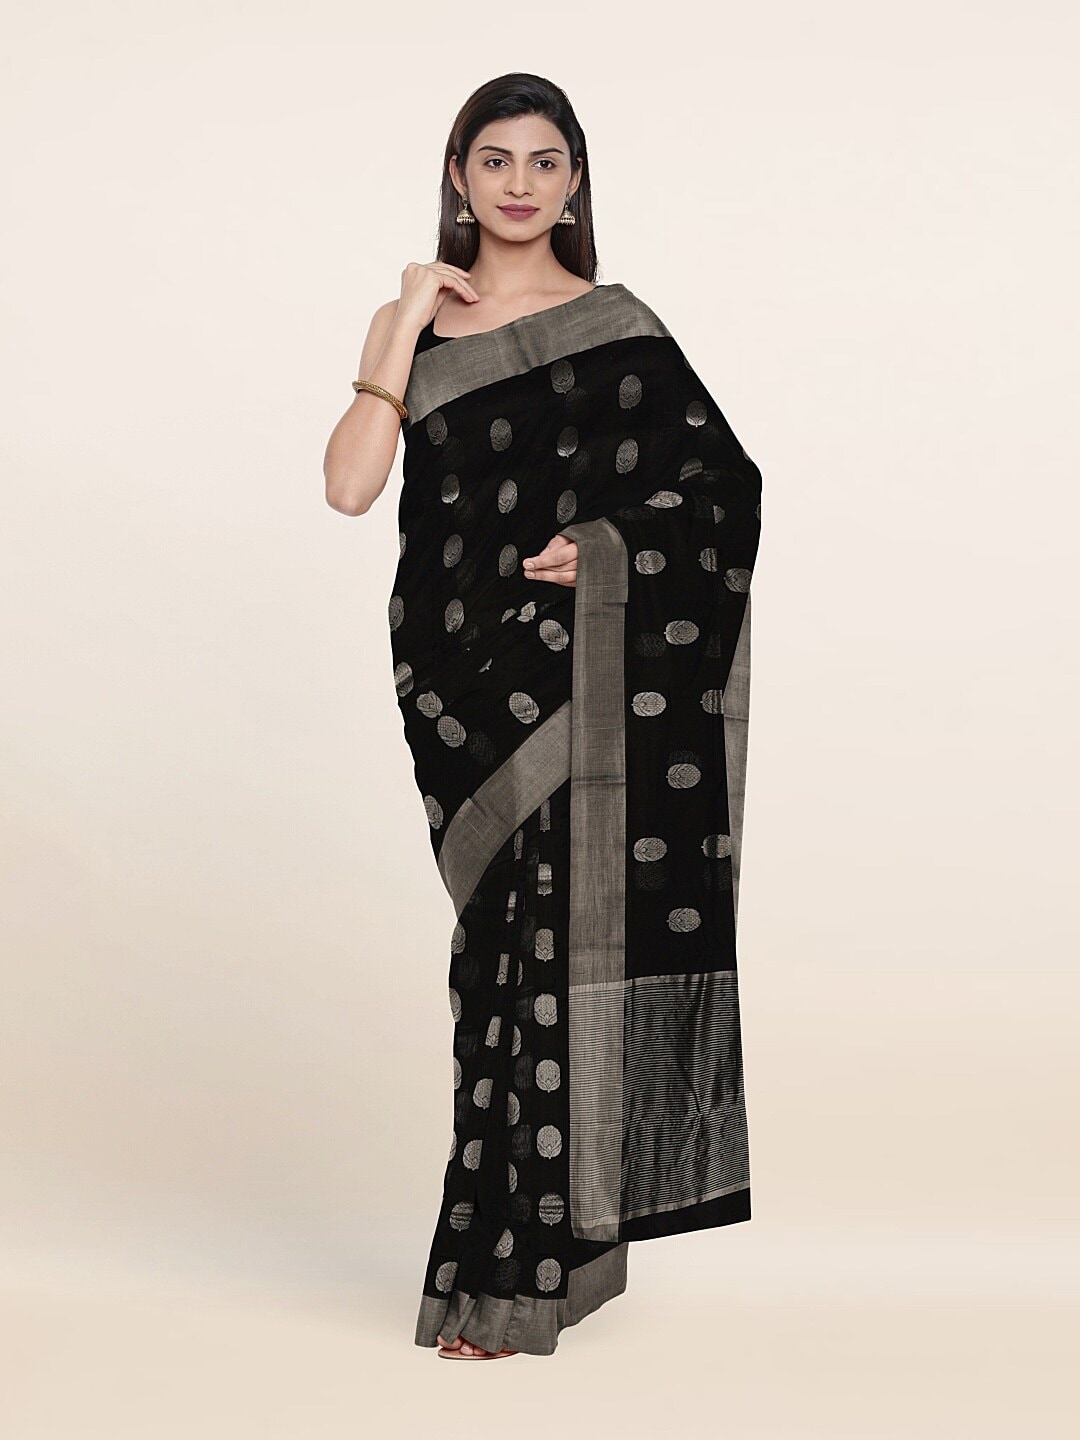 Pothys Black & Silver-Toned Floral Zari Silk Cotton Saree Price in India